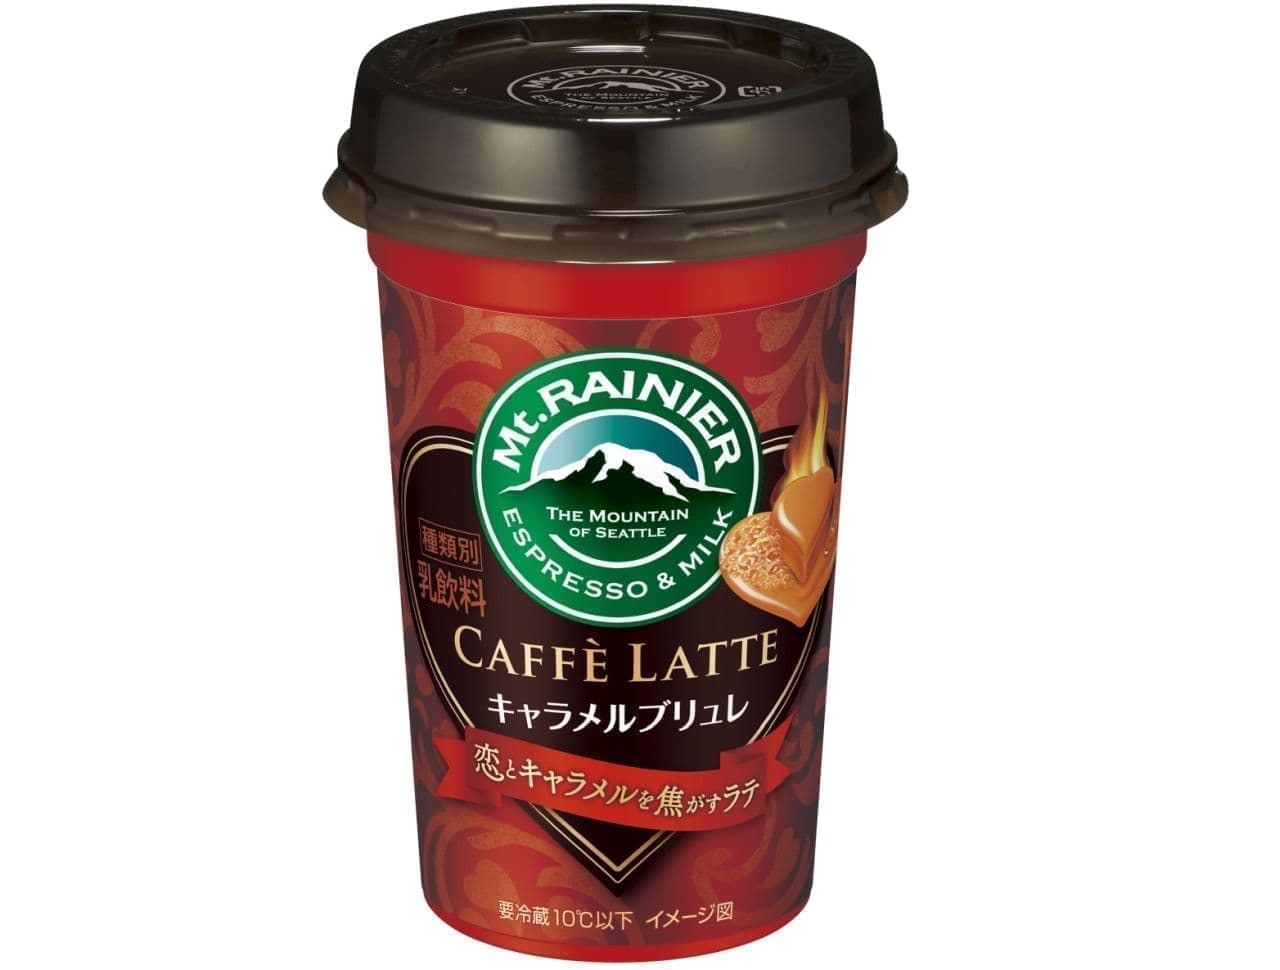 Mount Rainier "Mount Rainier Cafe Latte Caramel Brulee-Late that burns love and caramel-"